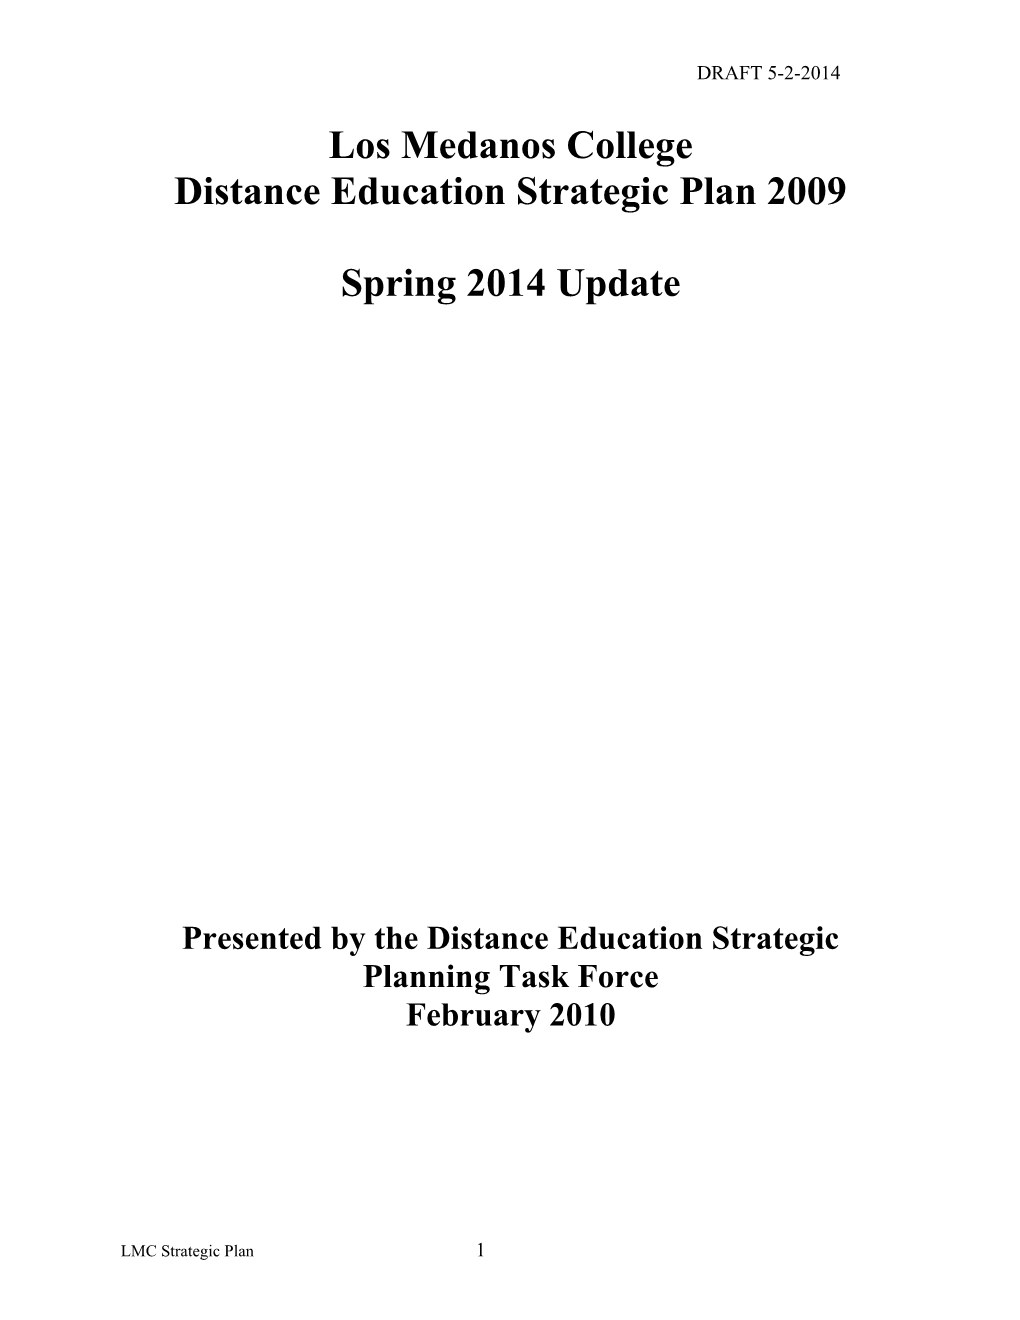 Distance Education Strategic Plan 2009